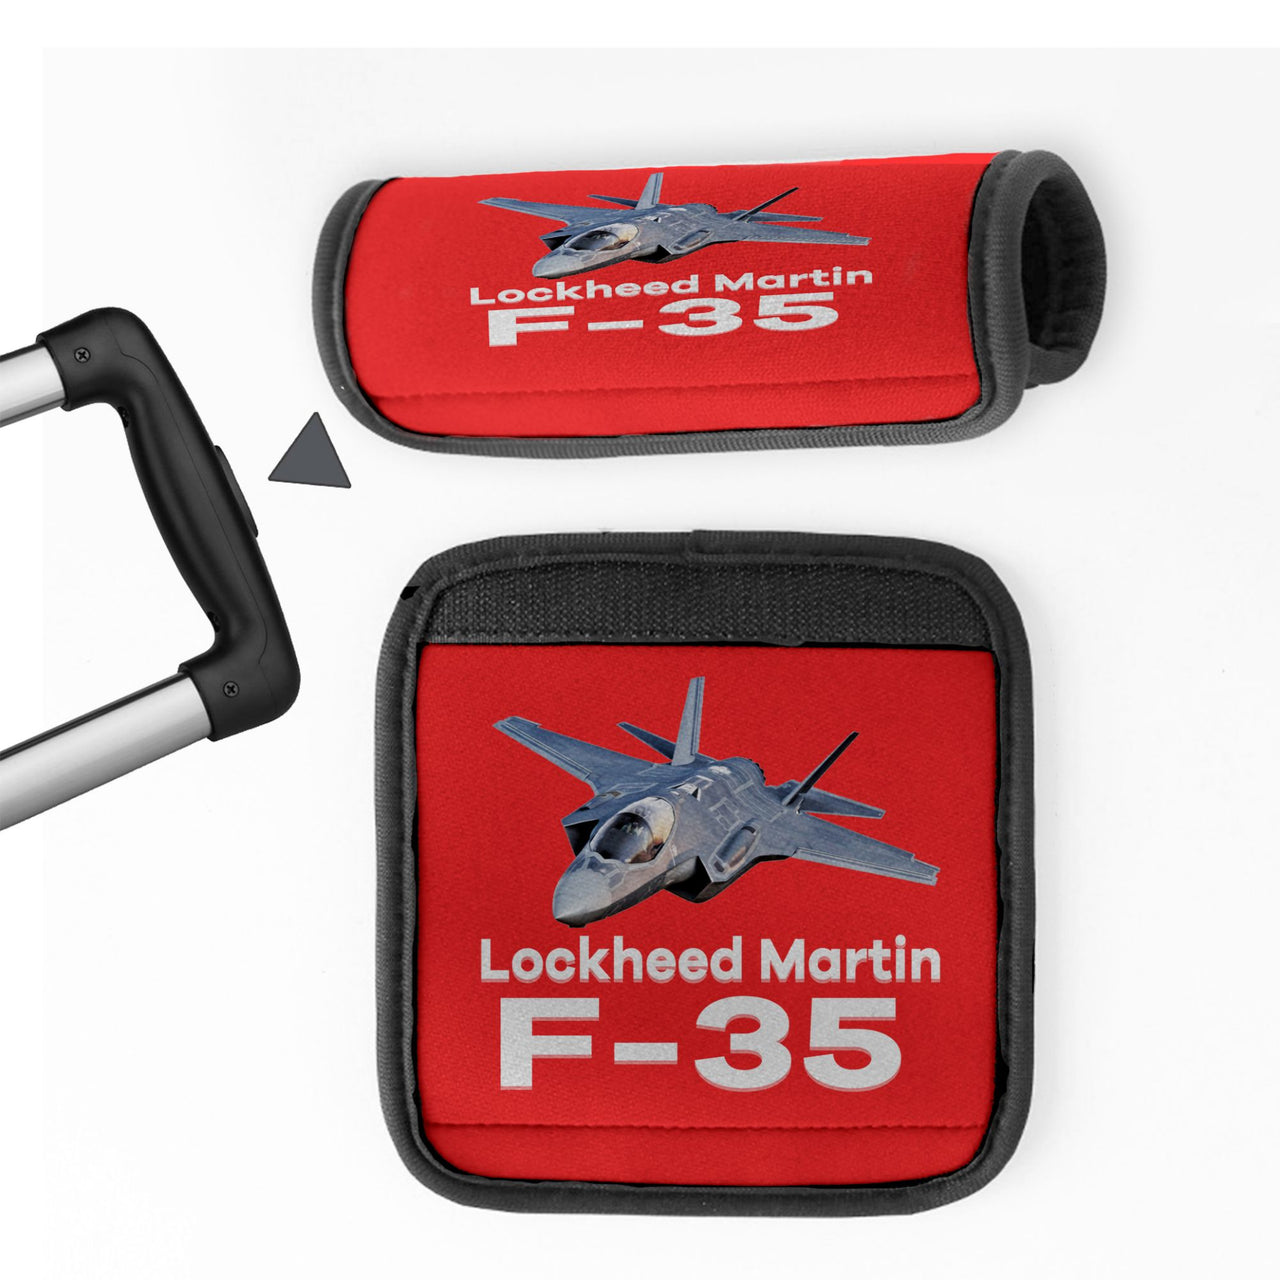 The Lockheed Martin F35 Designed Neoprene Luggage Handle Covers